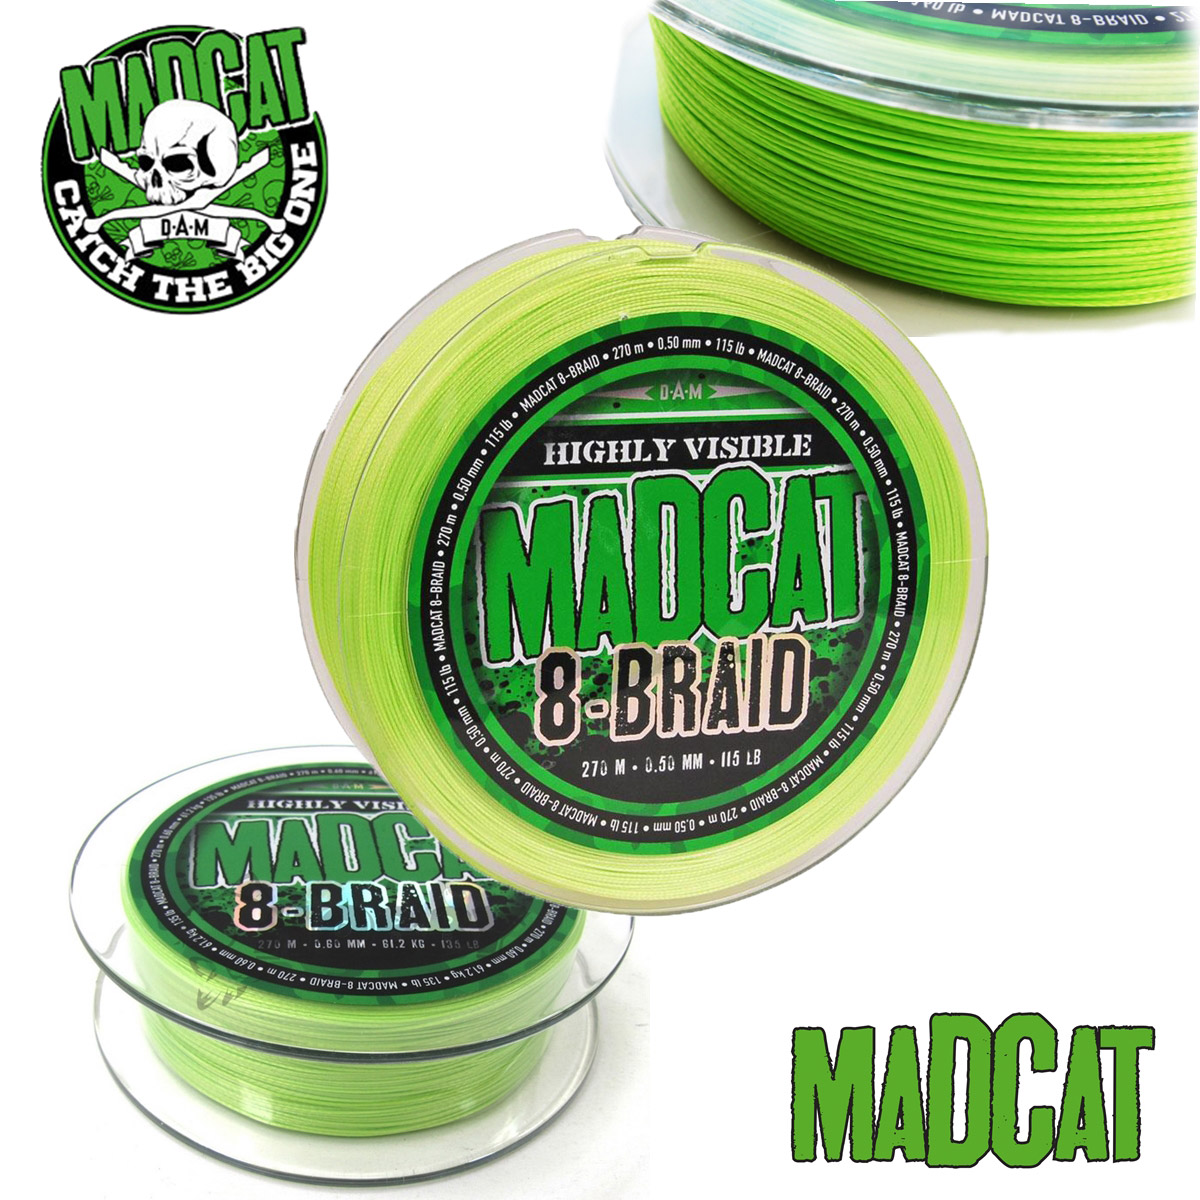 MadCat 8-Braid